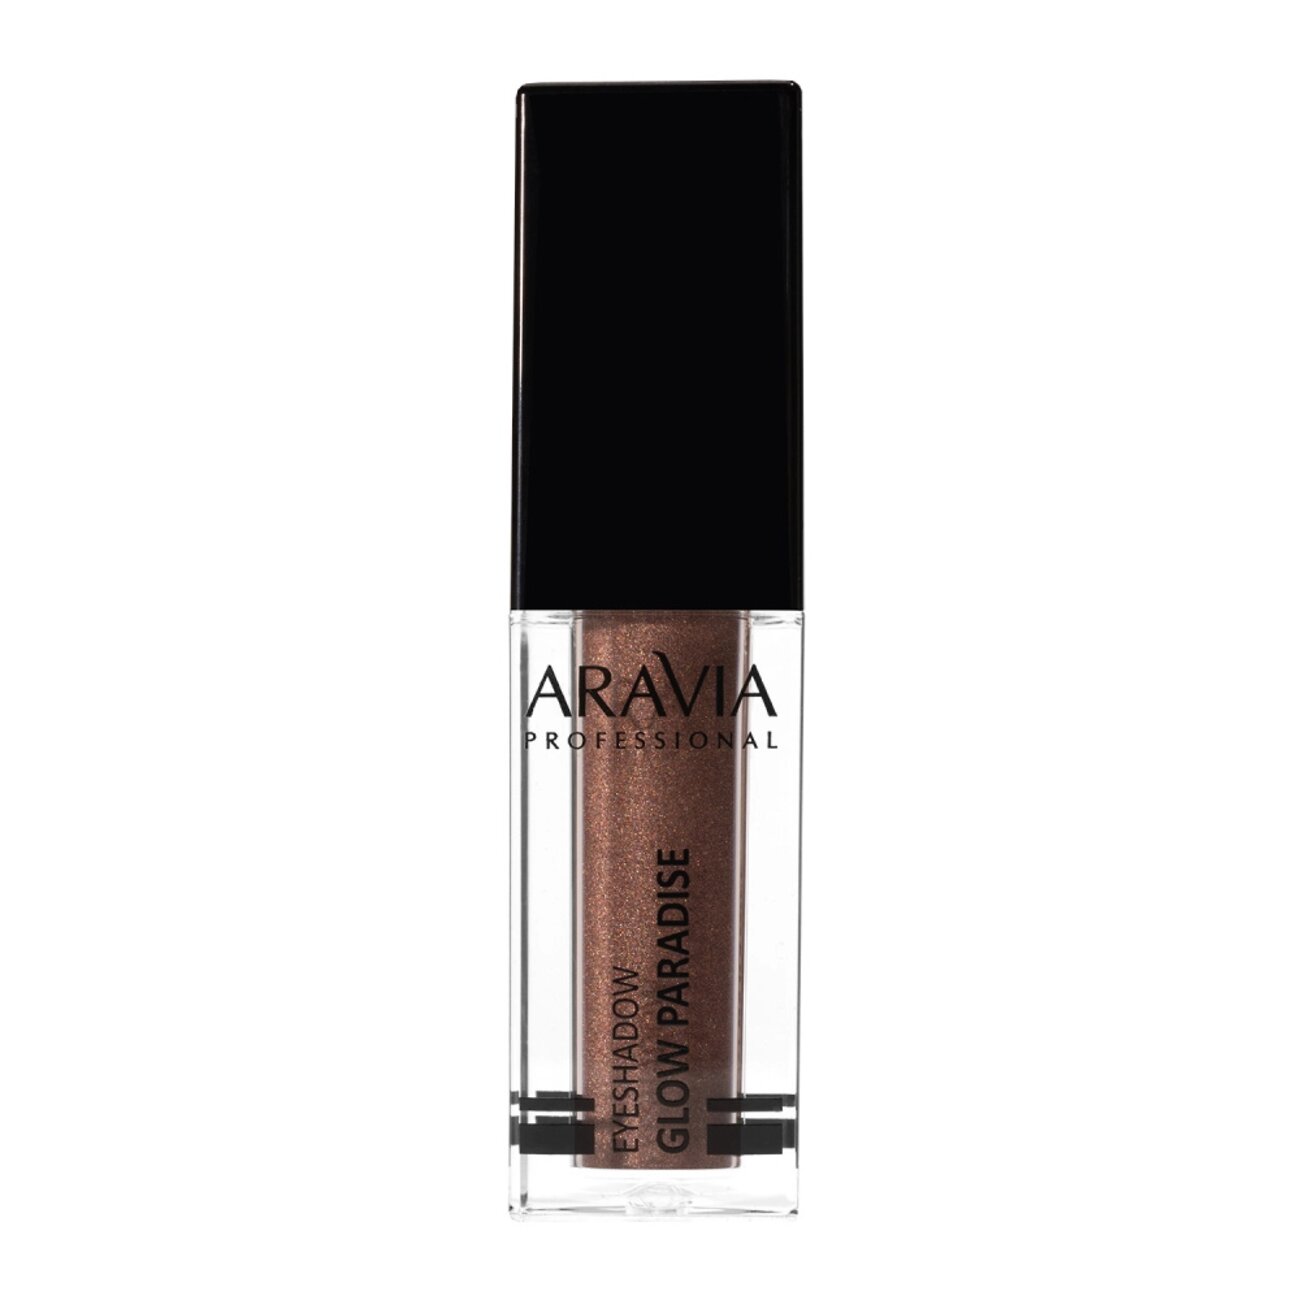 орг 15% ARAVIA Professional Aravia Professional Жидкие сияющие тени для век glow paradise, 5 мл – 04 golden brown